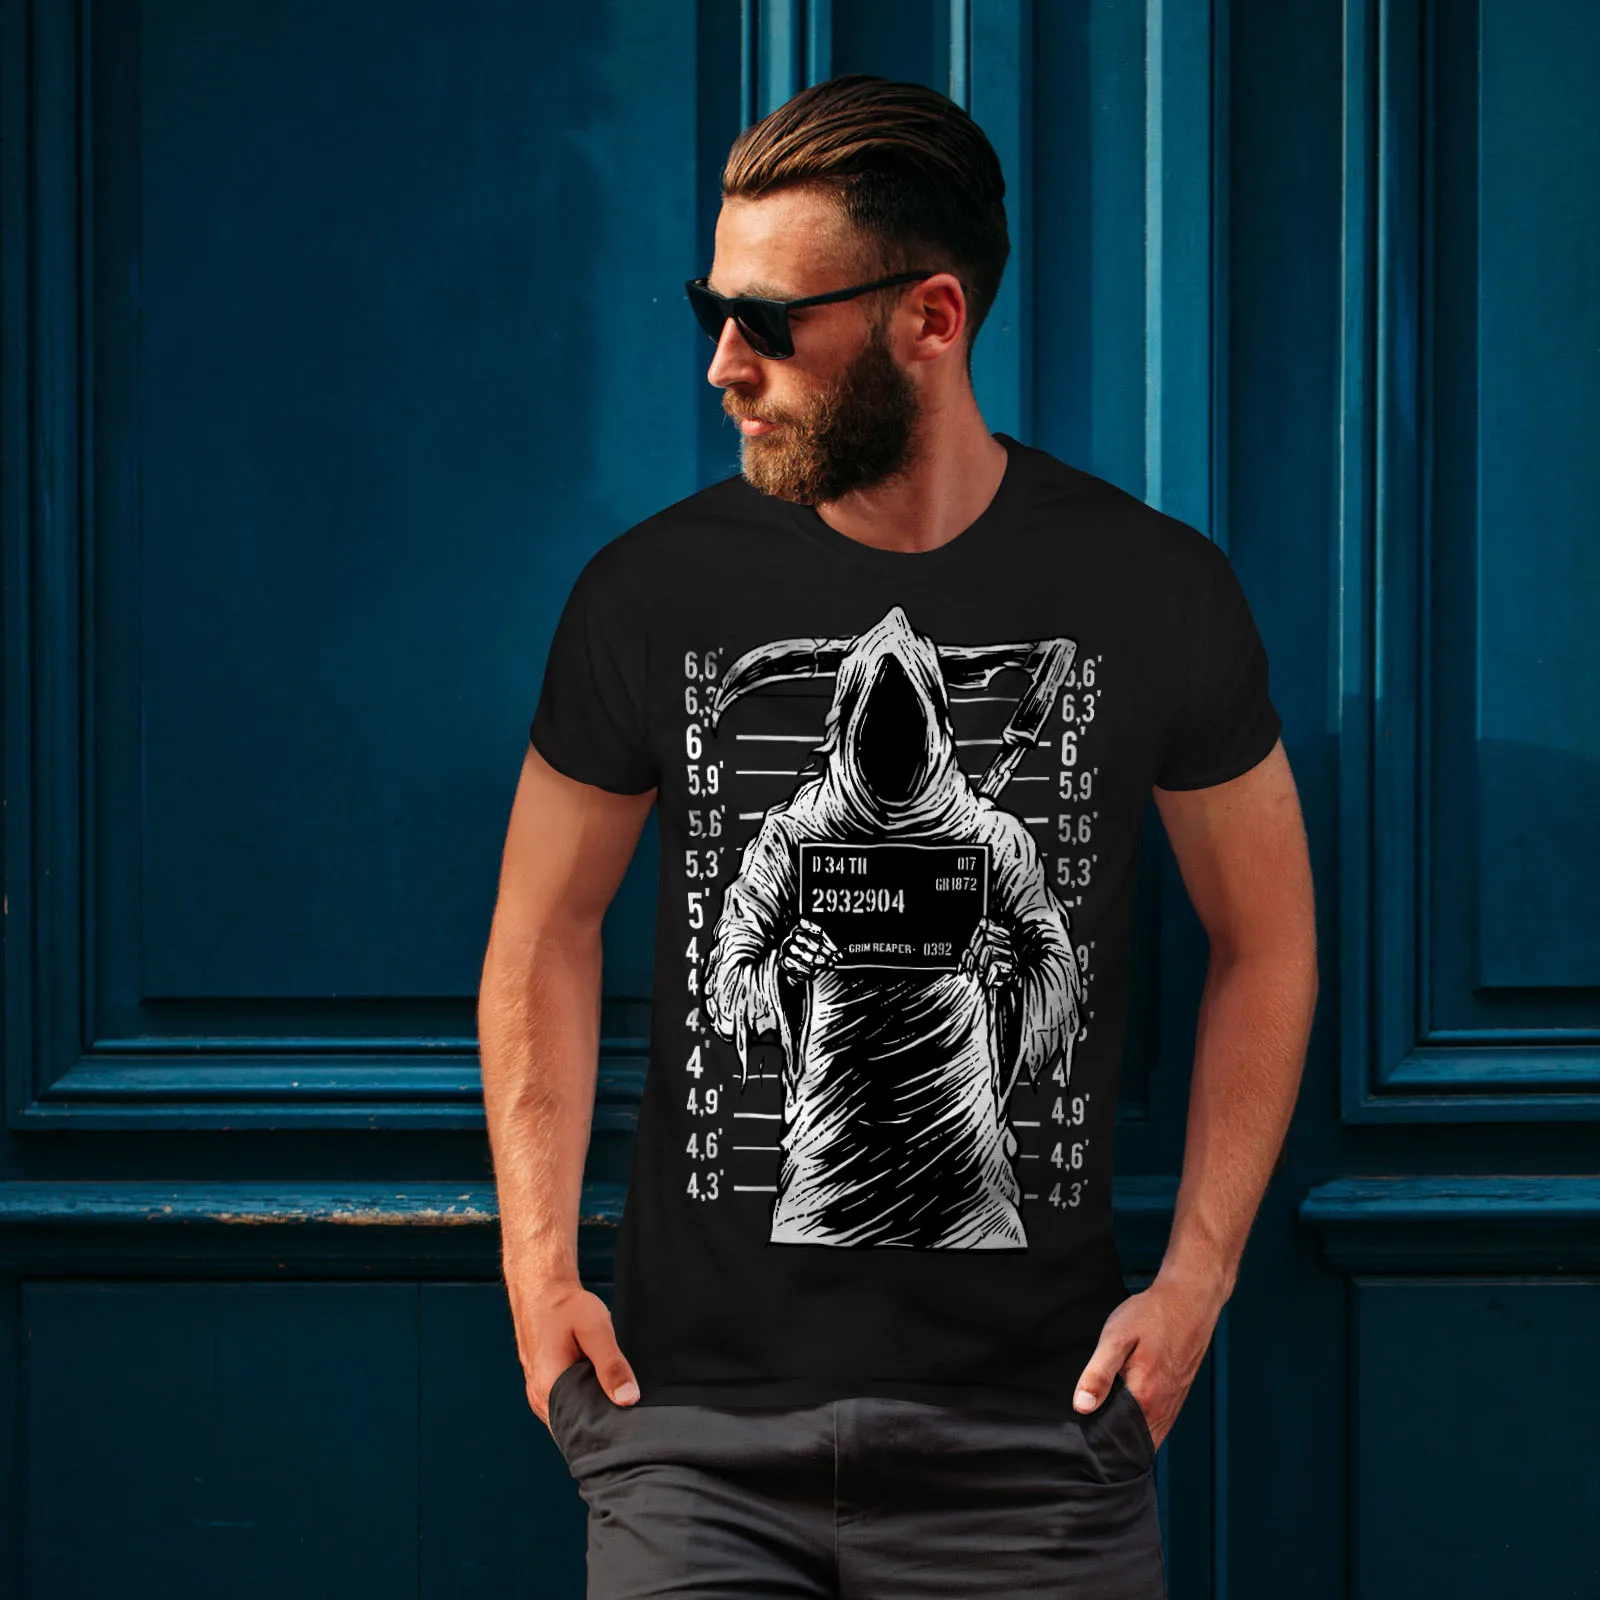 Jail Horror Graphic Design Grim Reaper Printed T-Shirt. Summer Cotton Short Sleeve O-Neck Men's T Shirt New S-3XL